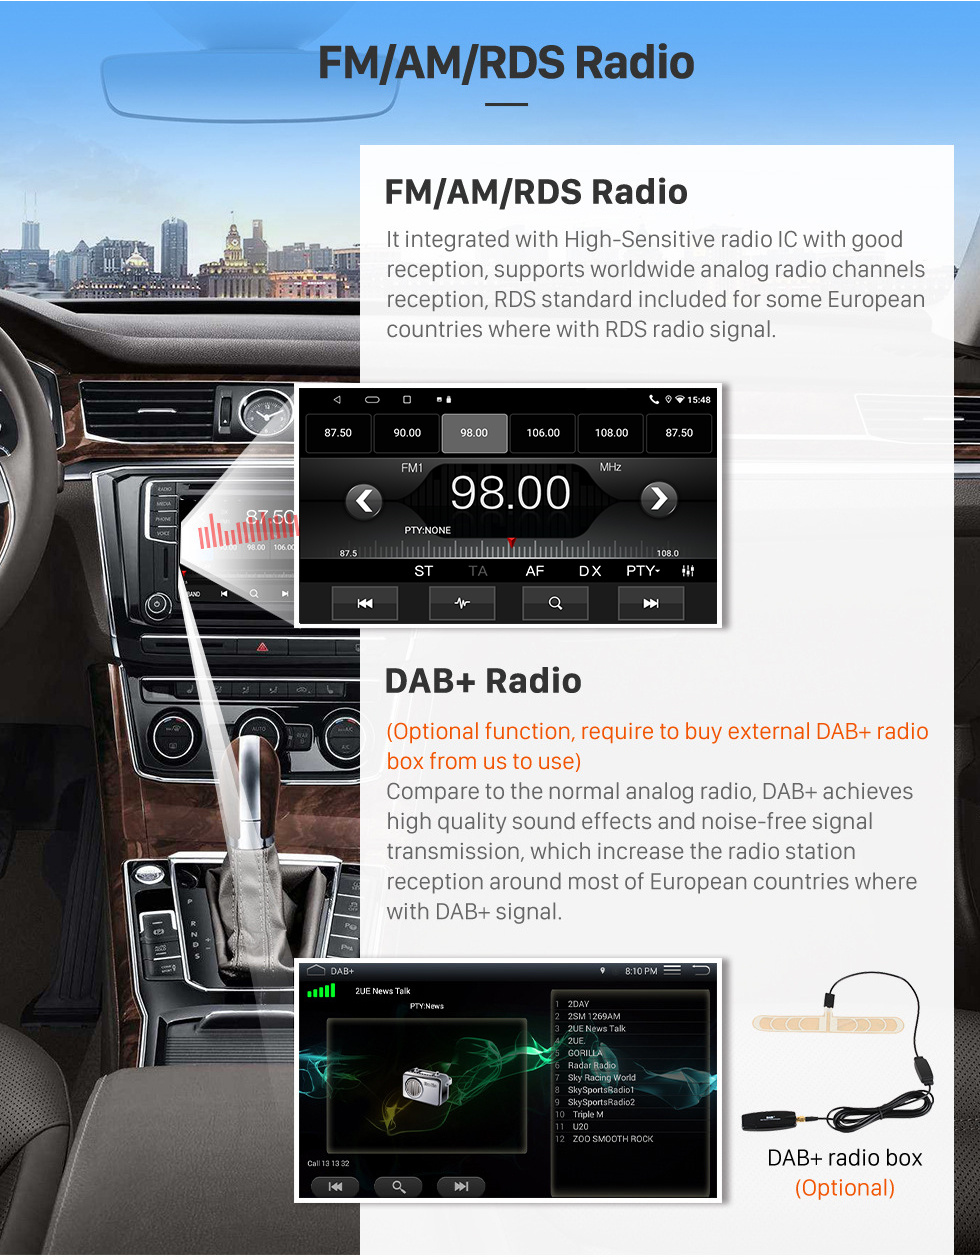 Seicane 9 Zoll HD Touchscreen für 2009-2021 HONDA INSIGHT LHD Stereo Autoradio Bluetooth Android Auto GPS Navigation Unterstützung DVR